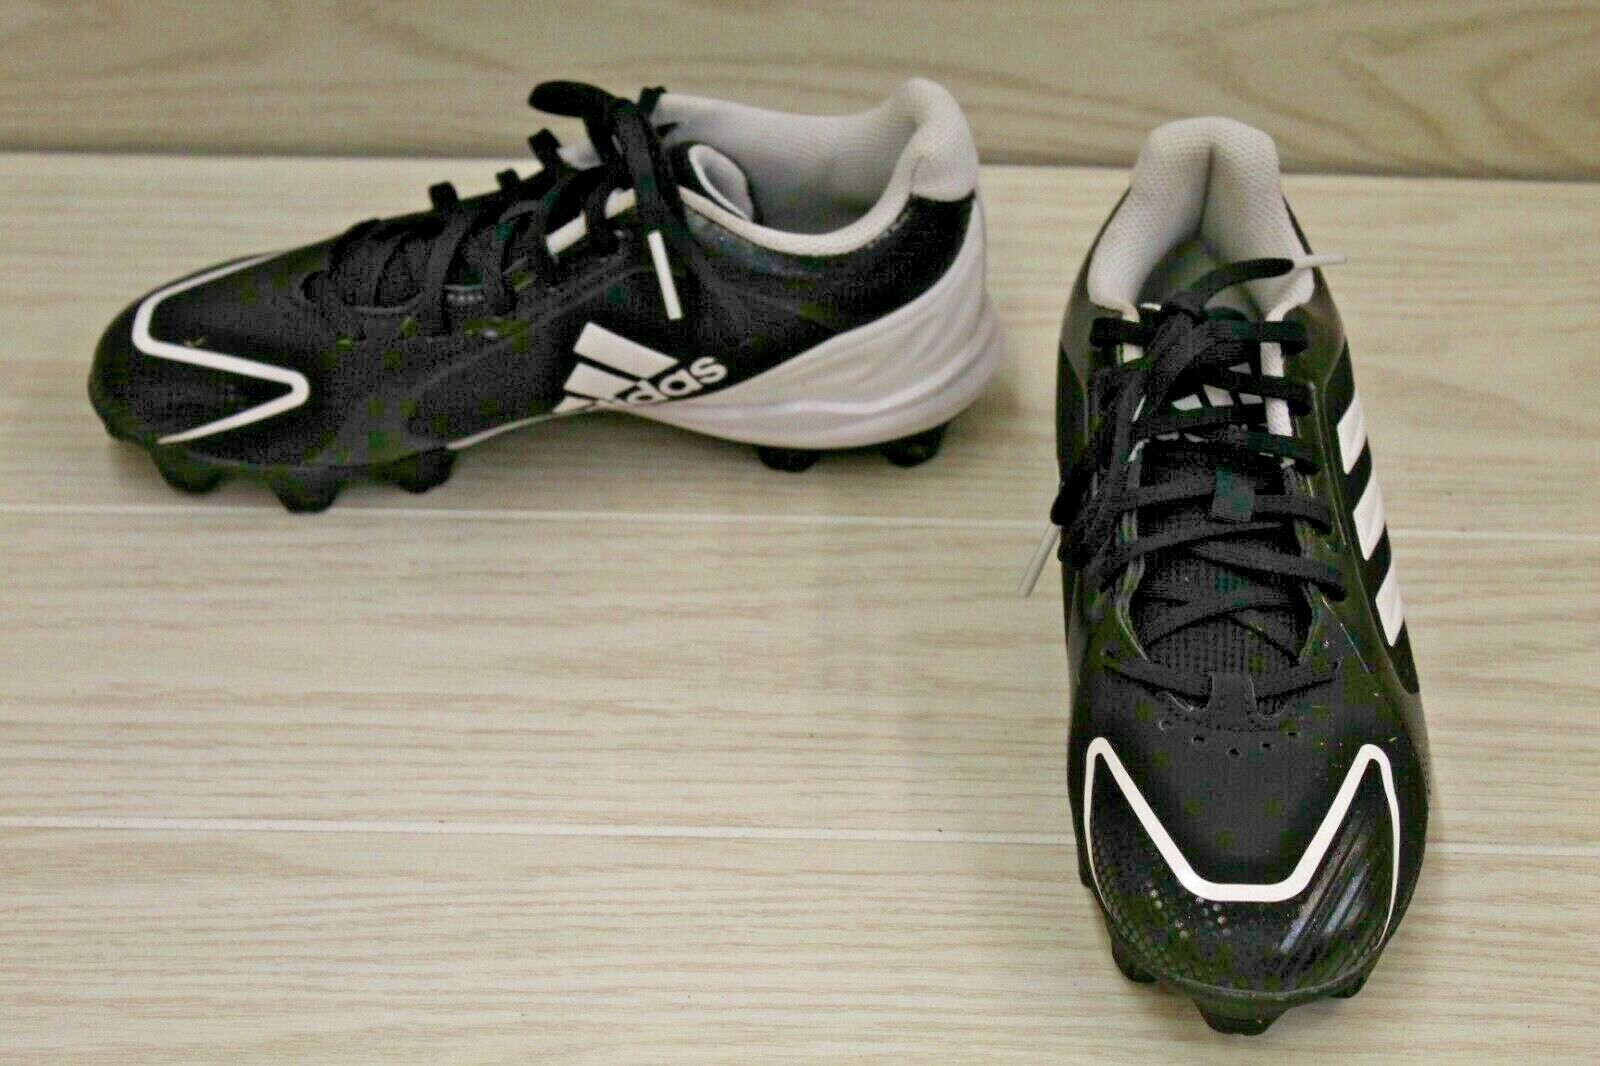 Adidas PureHustle Mid FV5726 Baseball Cleats - Men's Size 7.5, Black